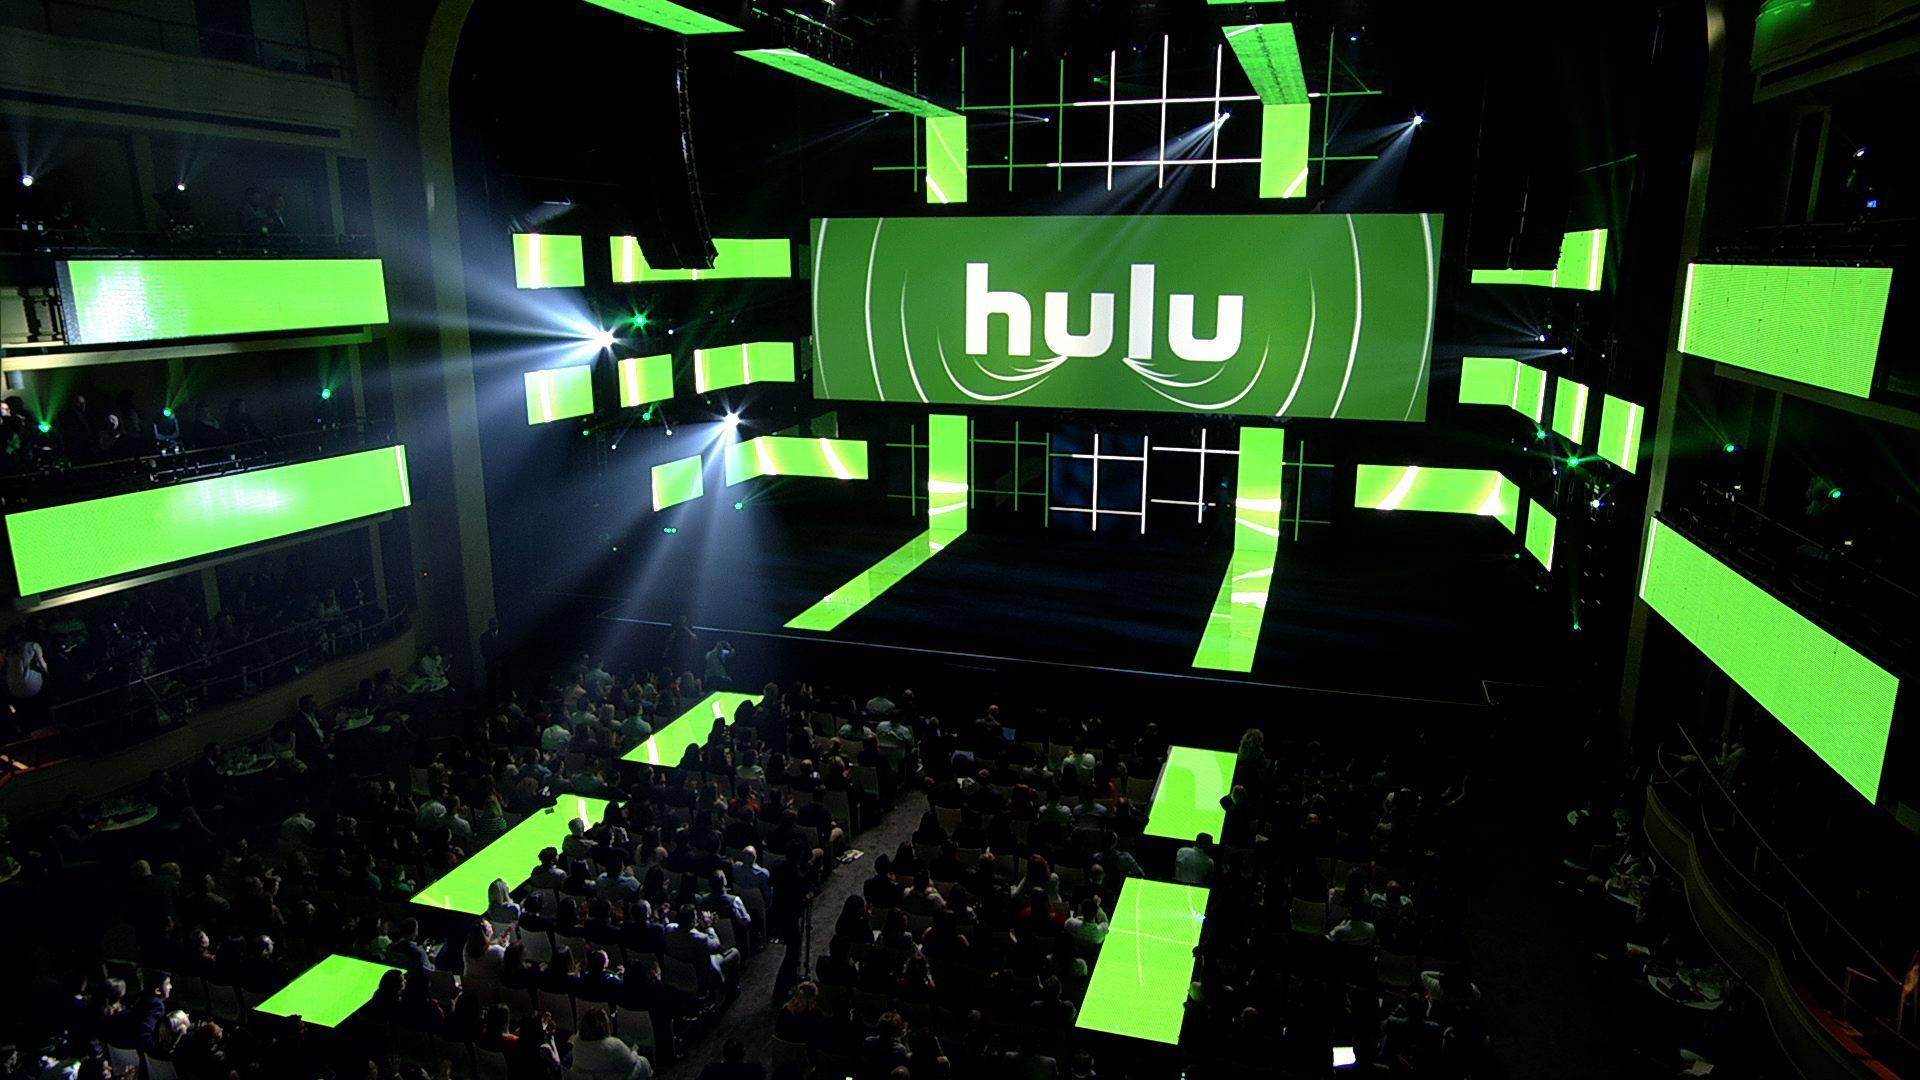 Hulu's Newfront Presentation Stage